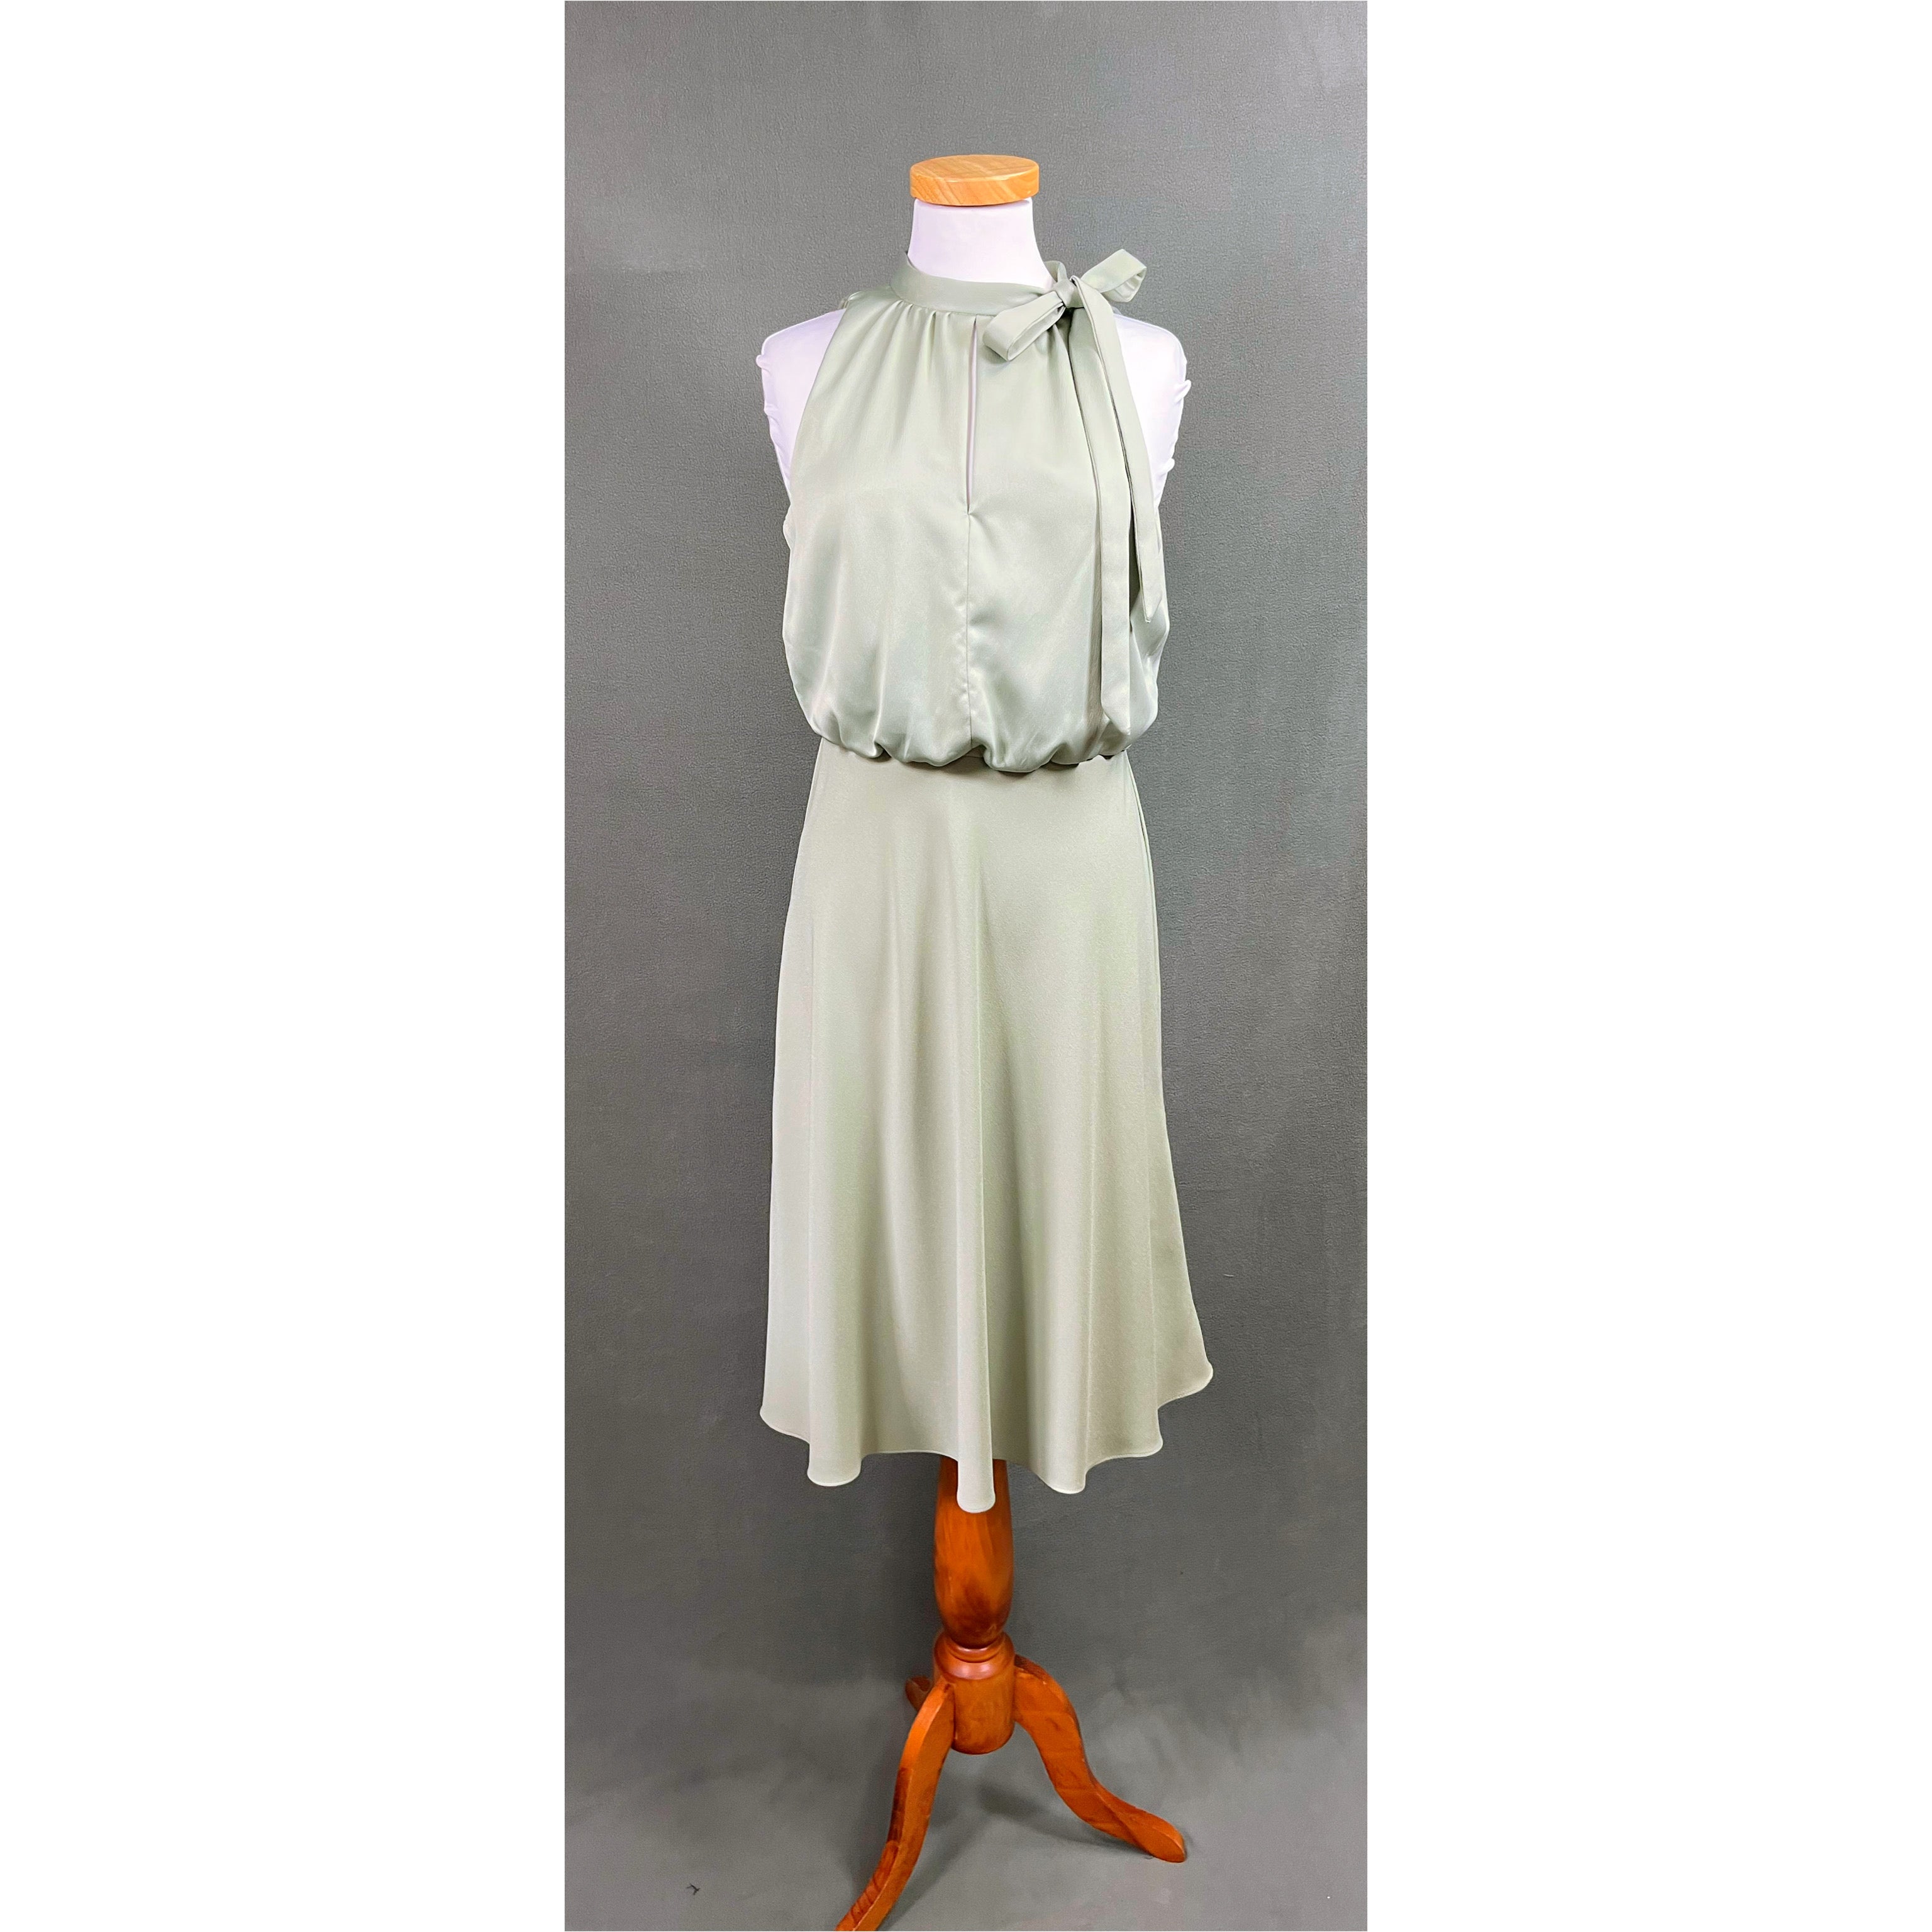 Adrianna Papell sage dress, size 4